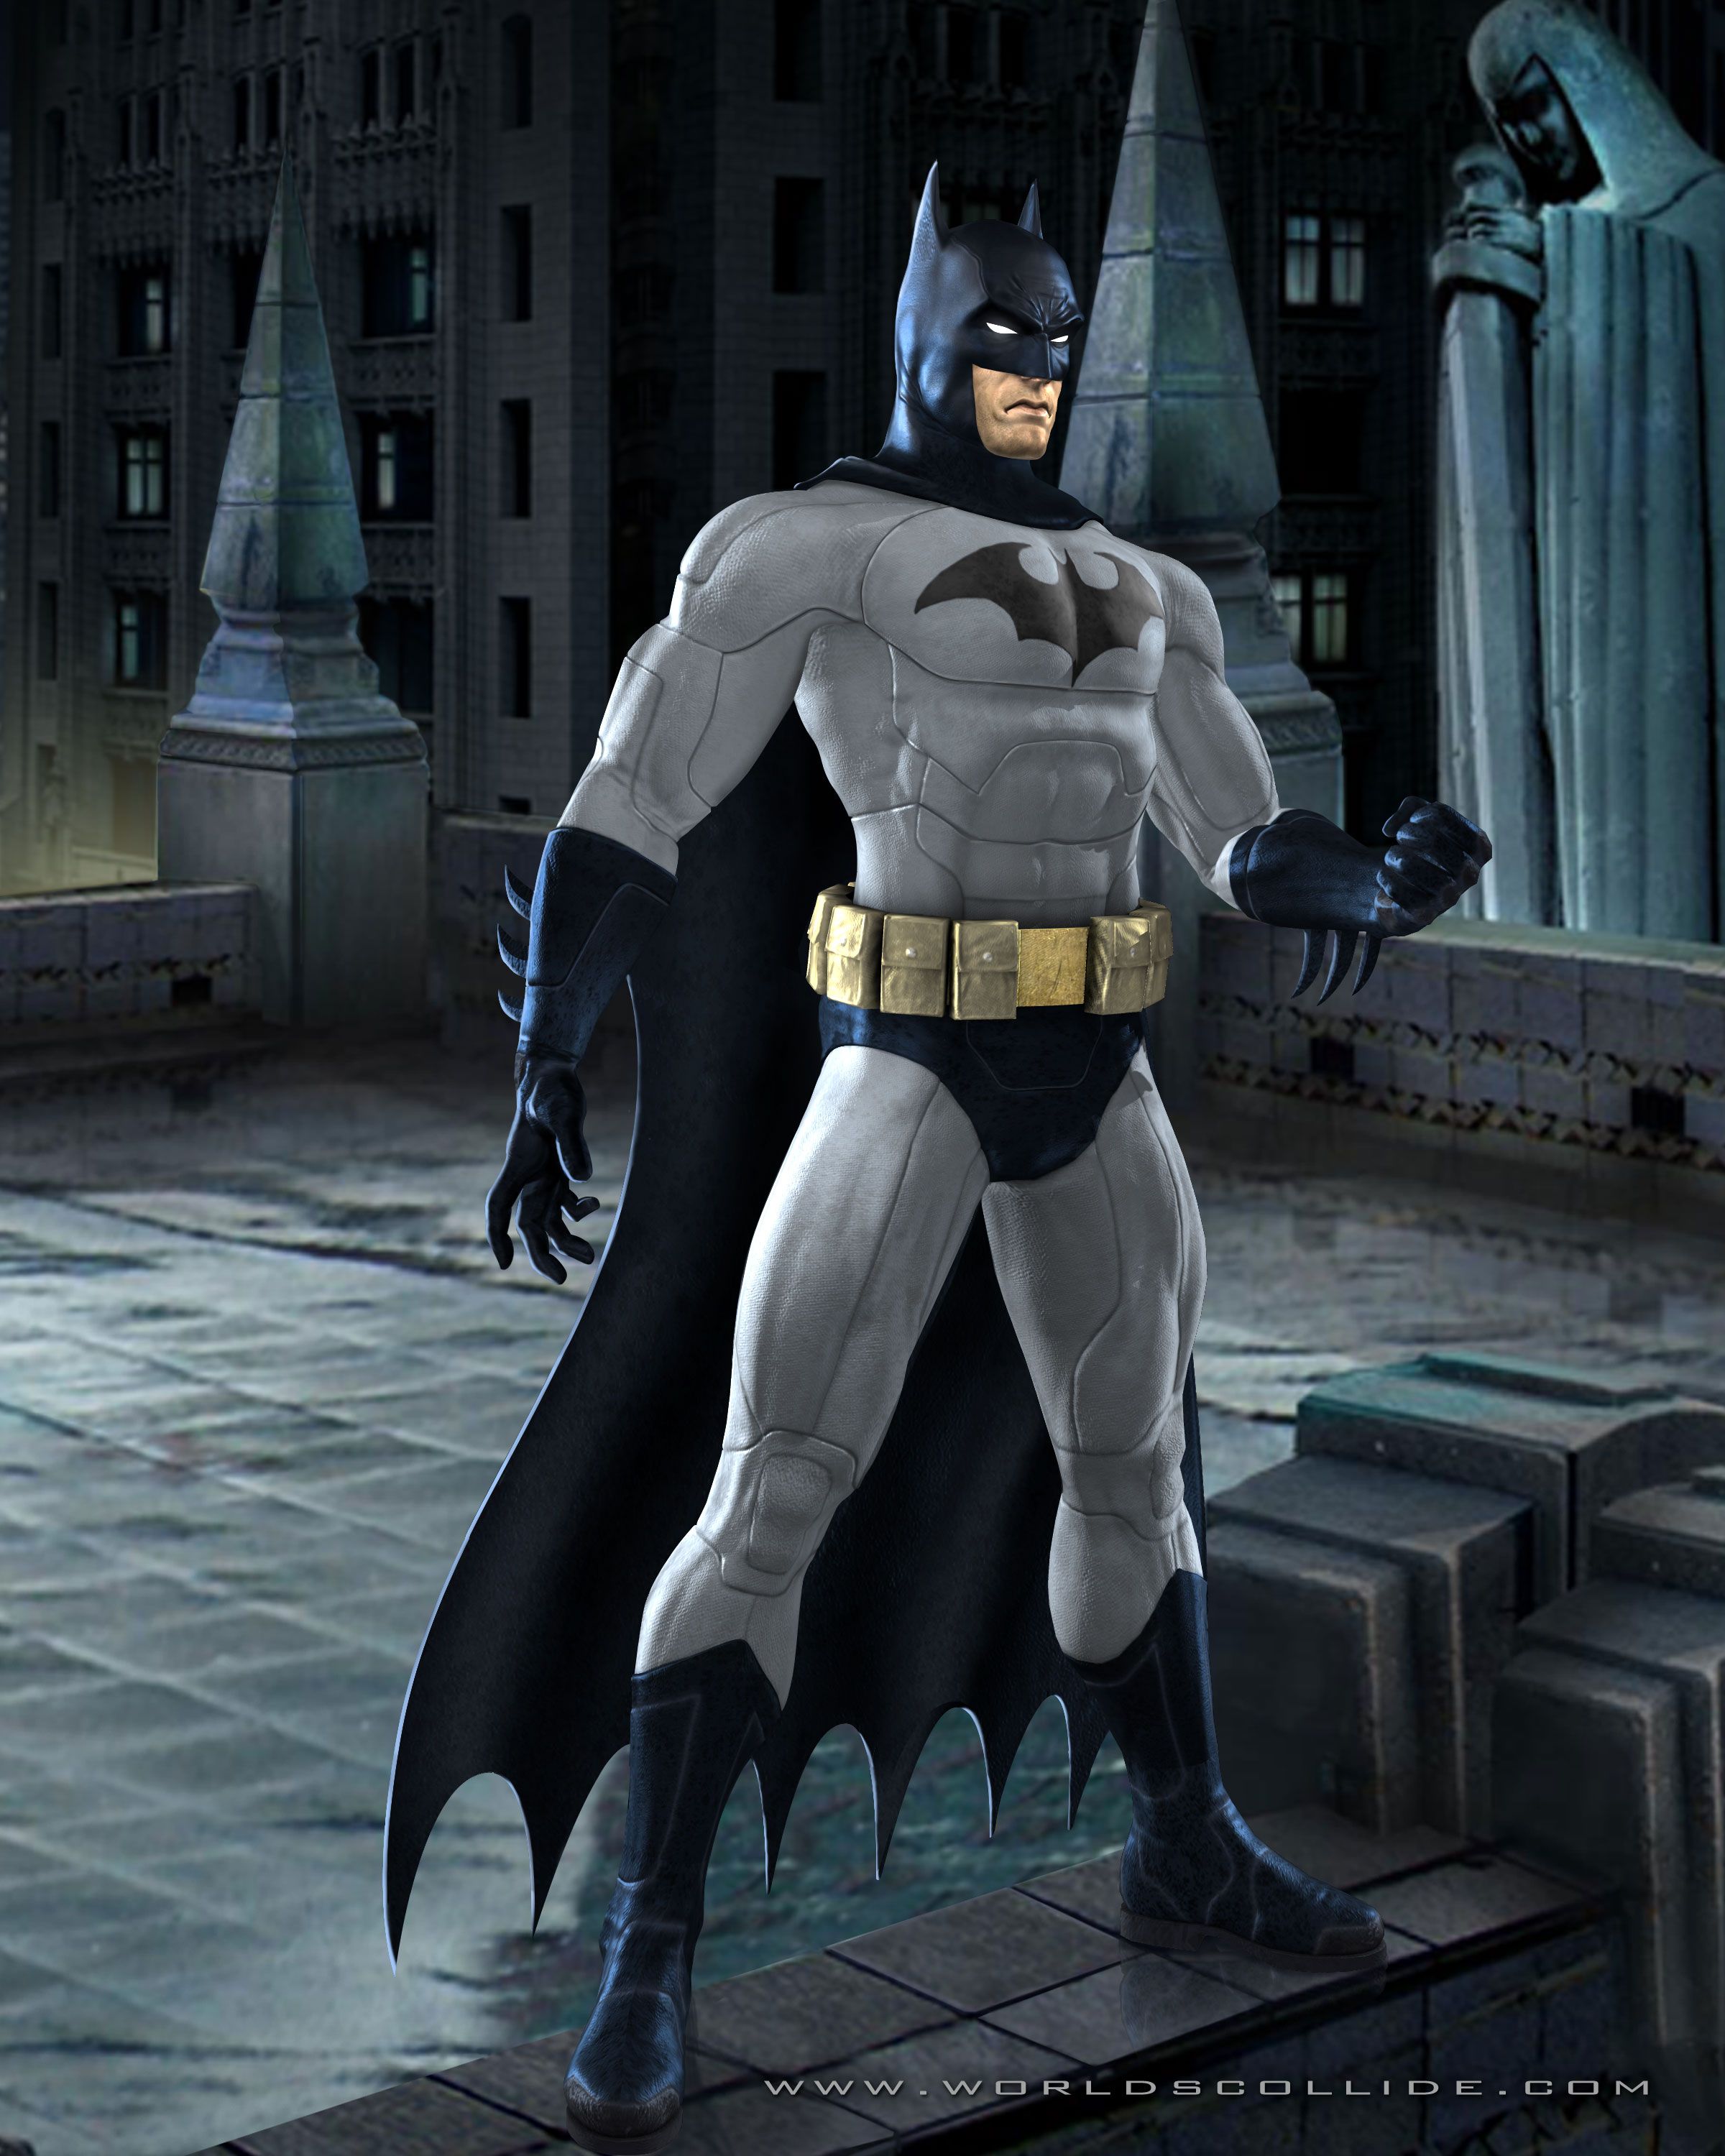 Batman Render Background for iPhone 6